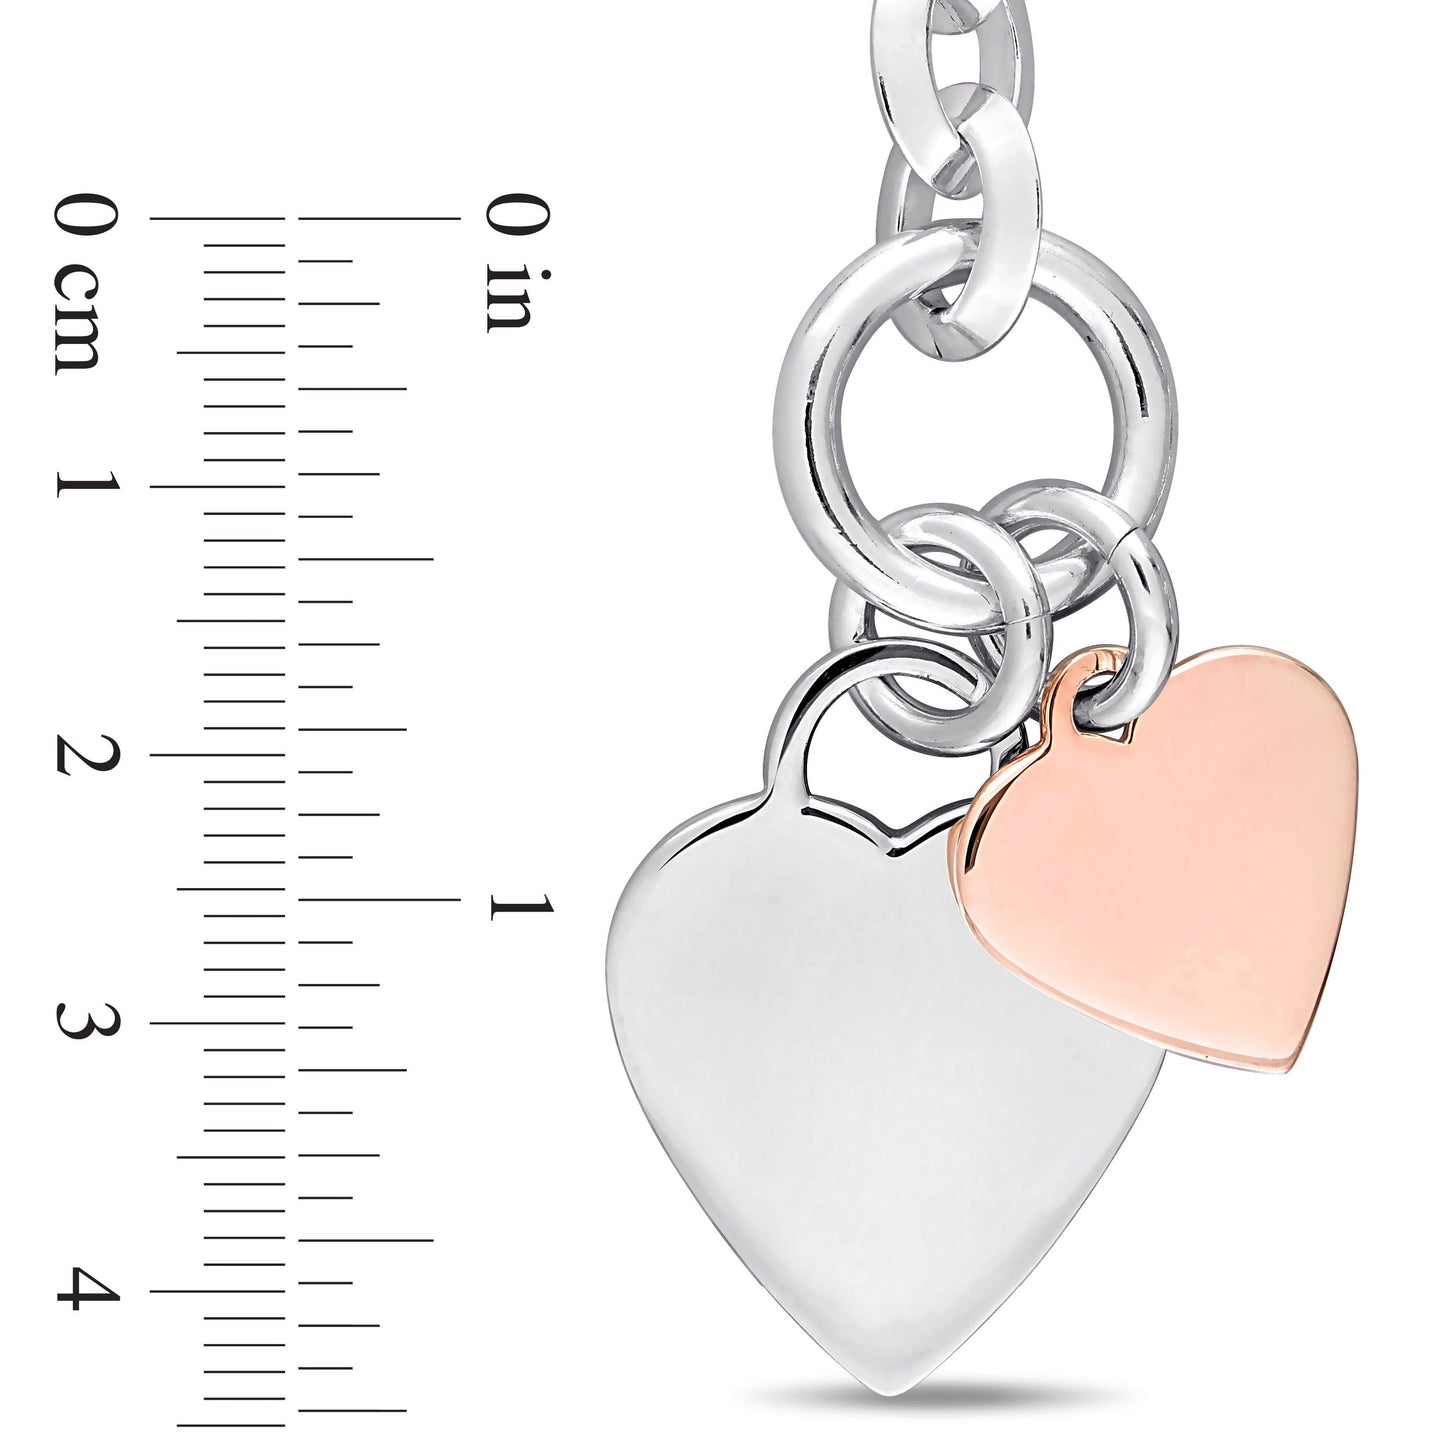 Sophia B Double Heart Charm & Toggle Clasp Bracelet